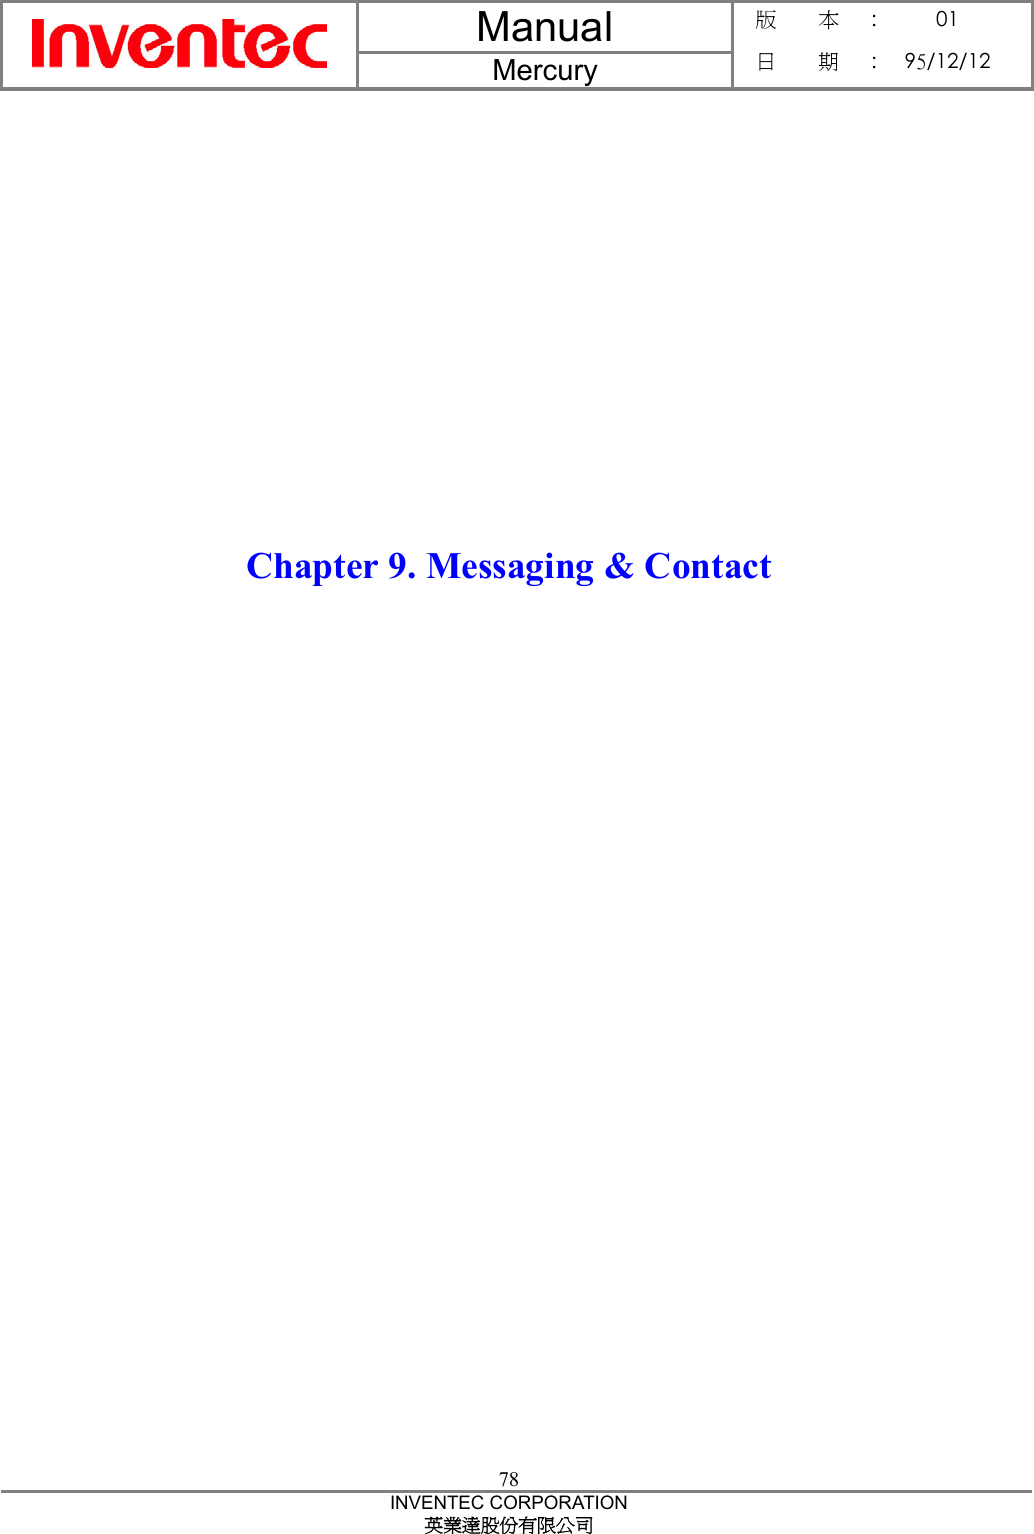 Manual  Mercury 版    本 :  01 日    期 : 95/12/12  78 INVENTEC CORPORATION 英業達股份有限公司             Chapter 9. Messaging &amp; Contact 